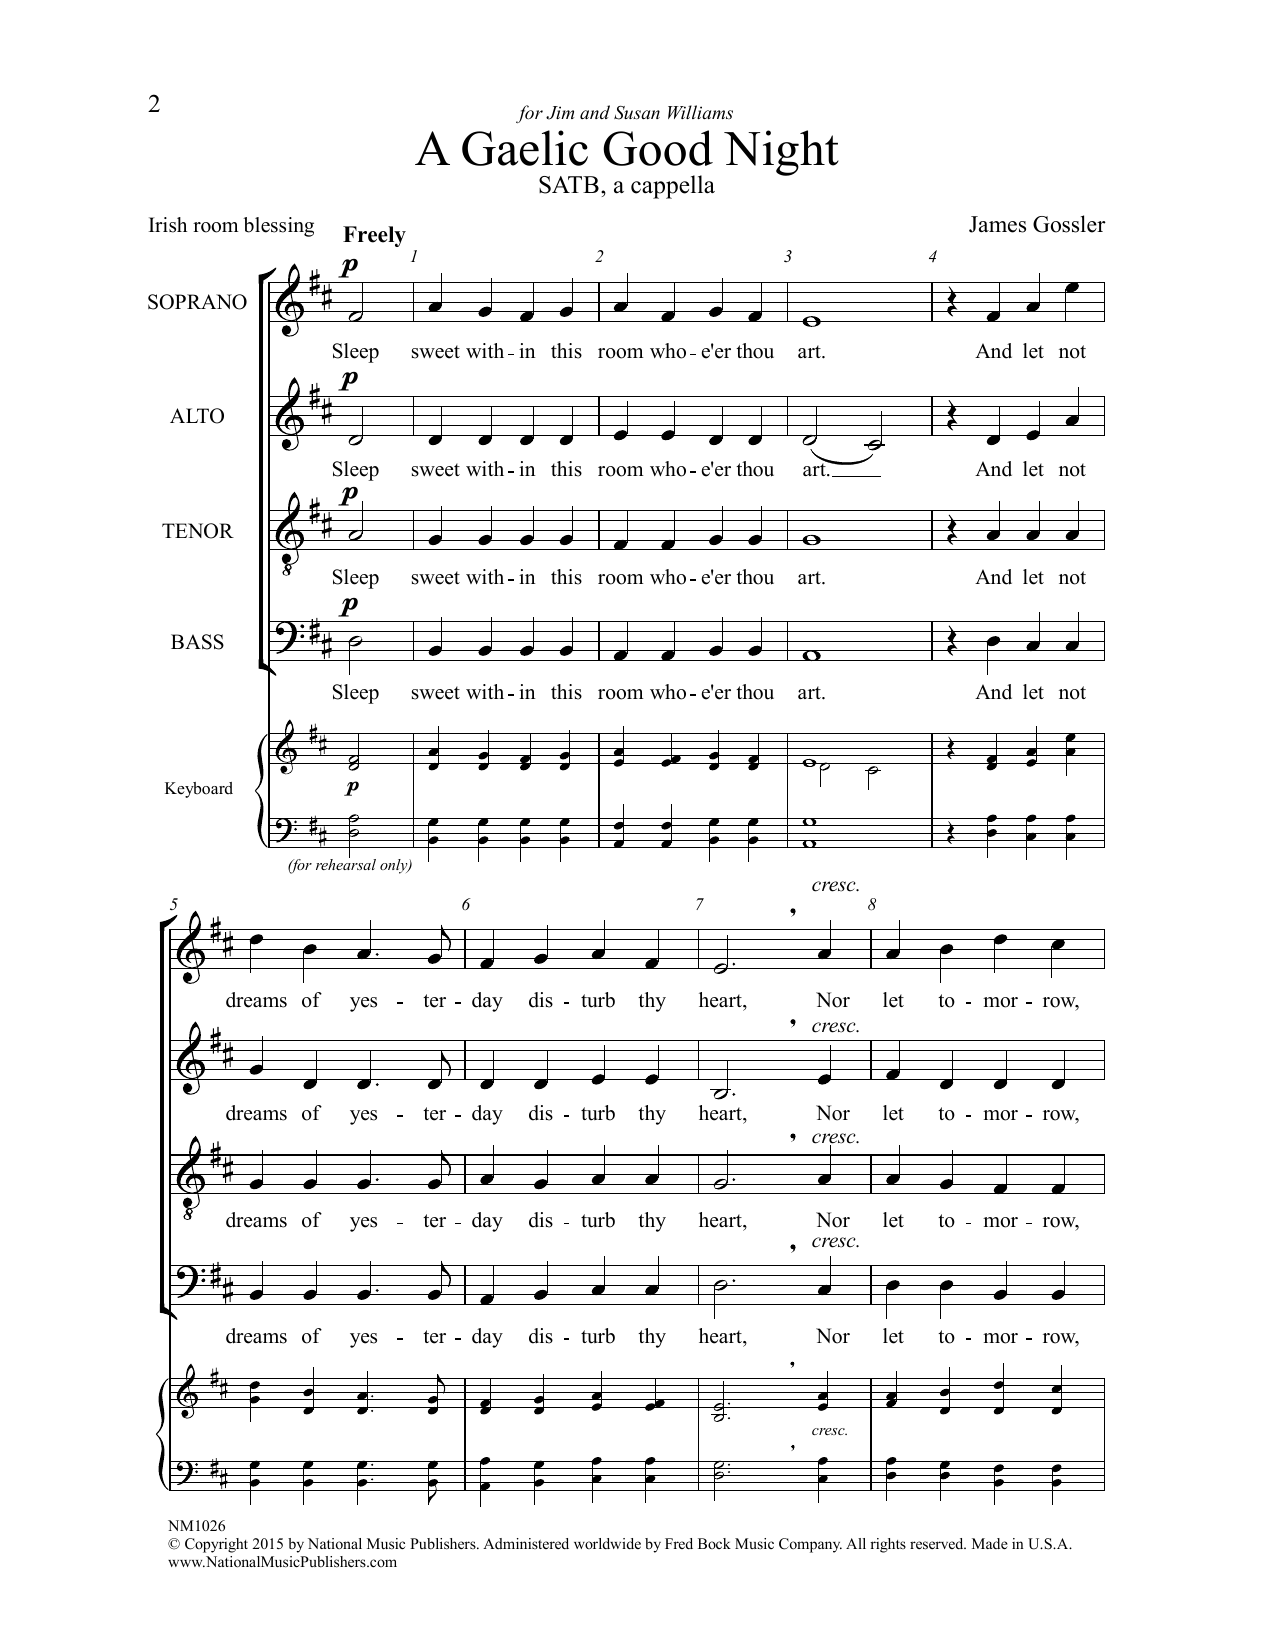 James Gossler A Gaelic Good Night Sheet Music Notes & Chords for SATB Choir - Download or Print PDF